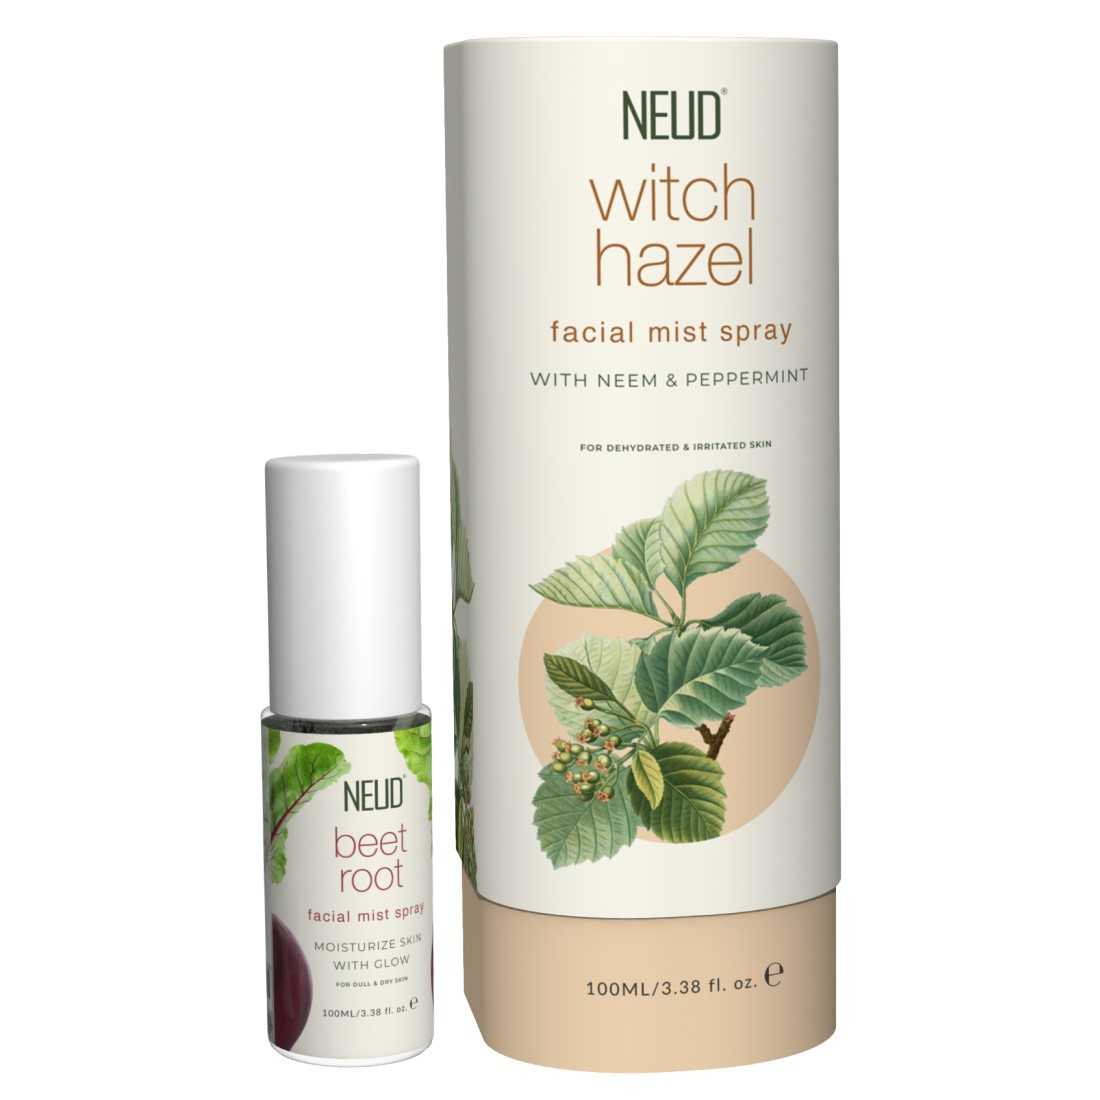 NEUD Witch Hazel Facial Mist Spray For Dehydrated & Irritated Skin - 100 ml